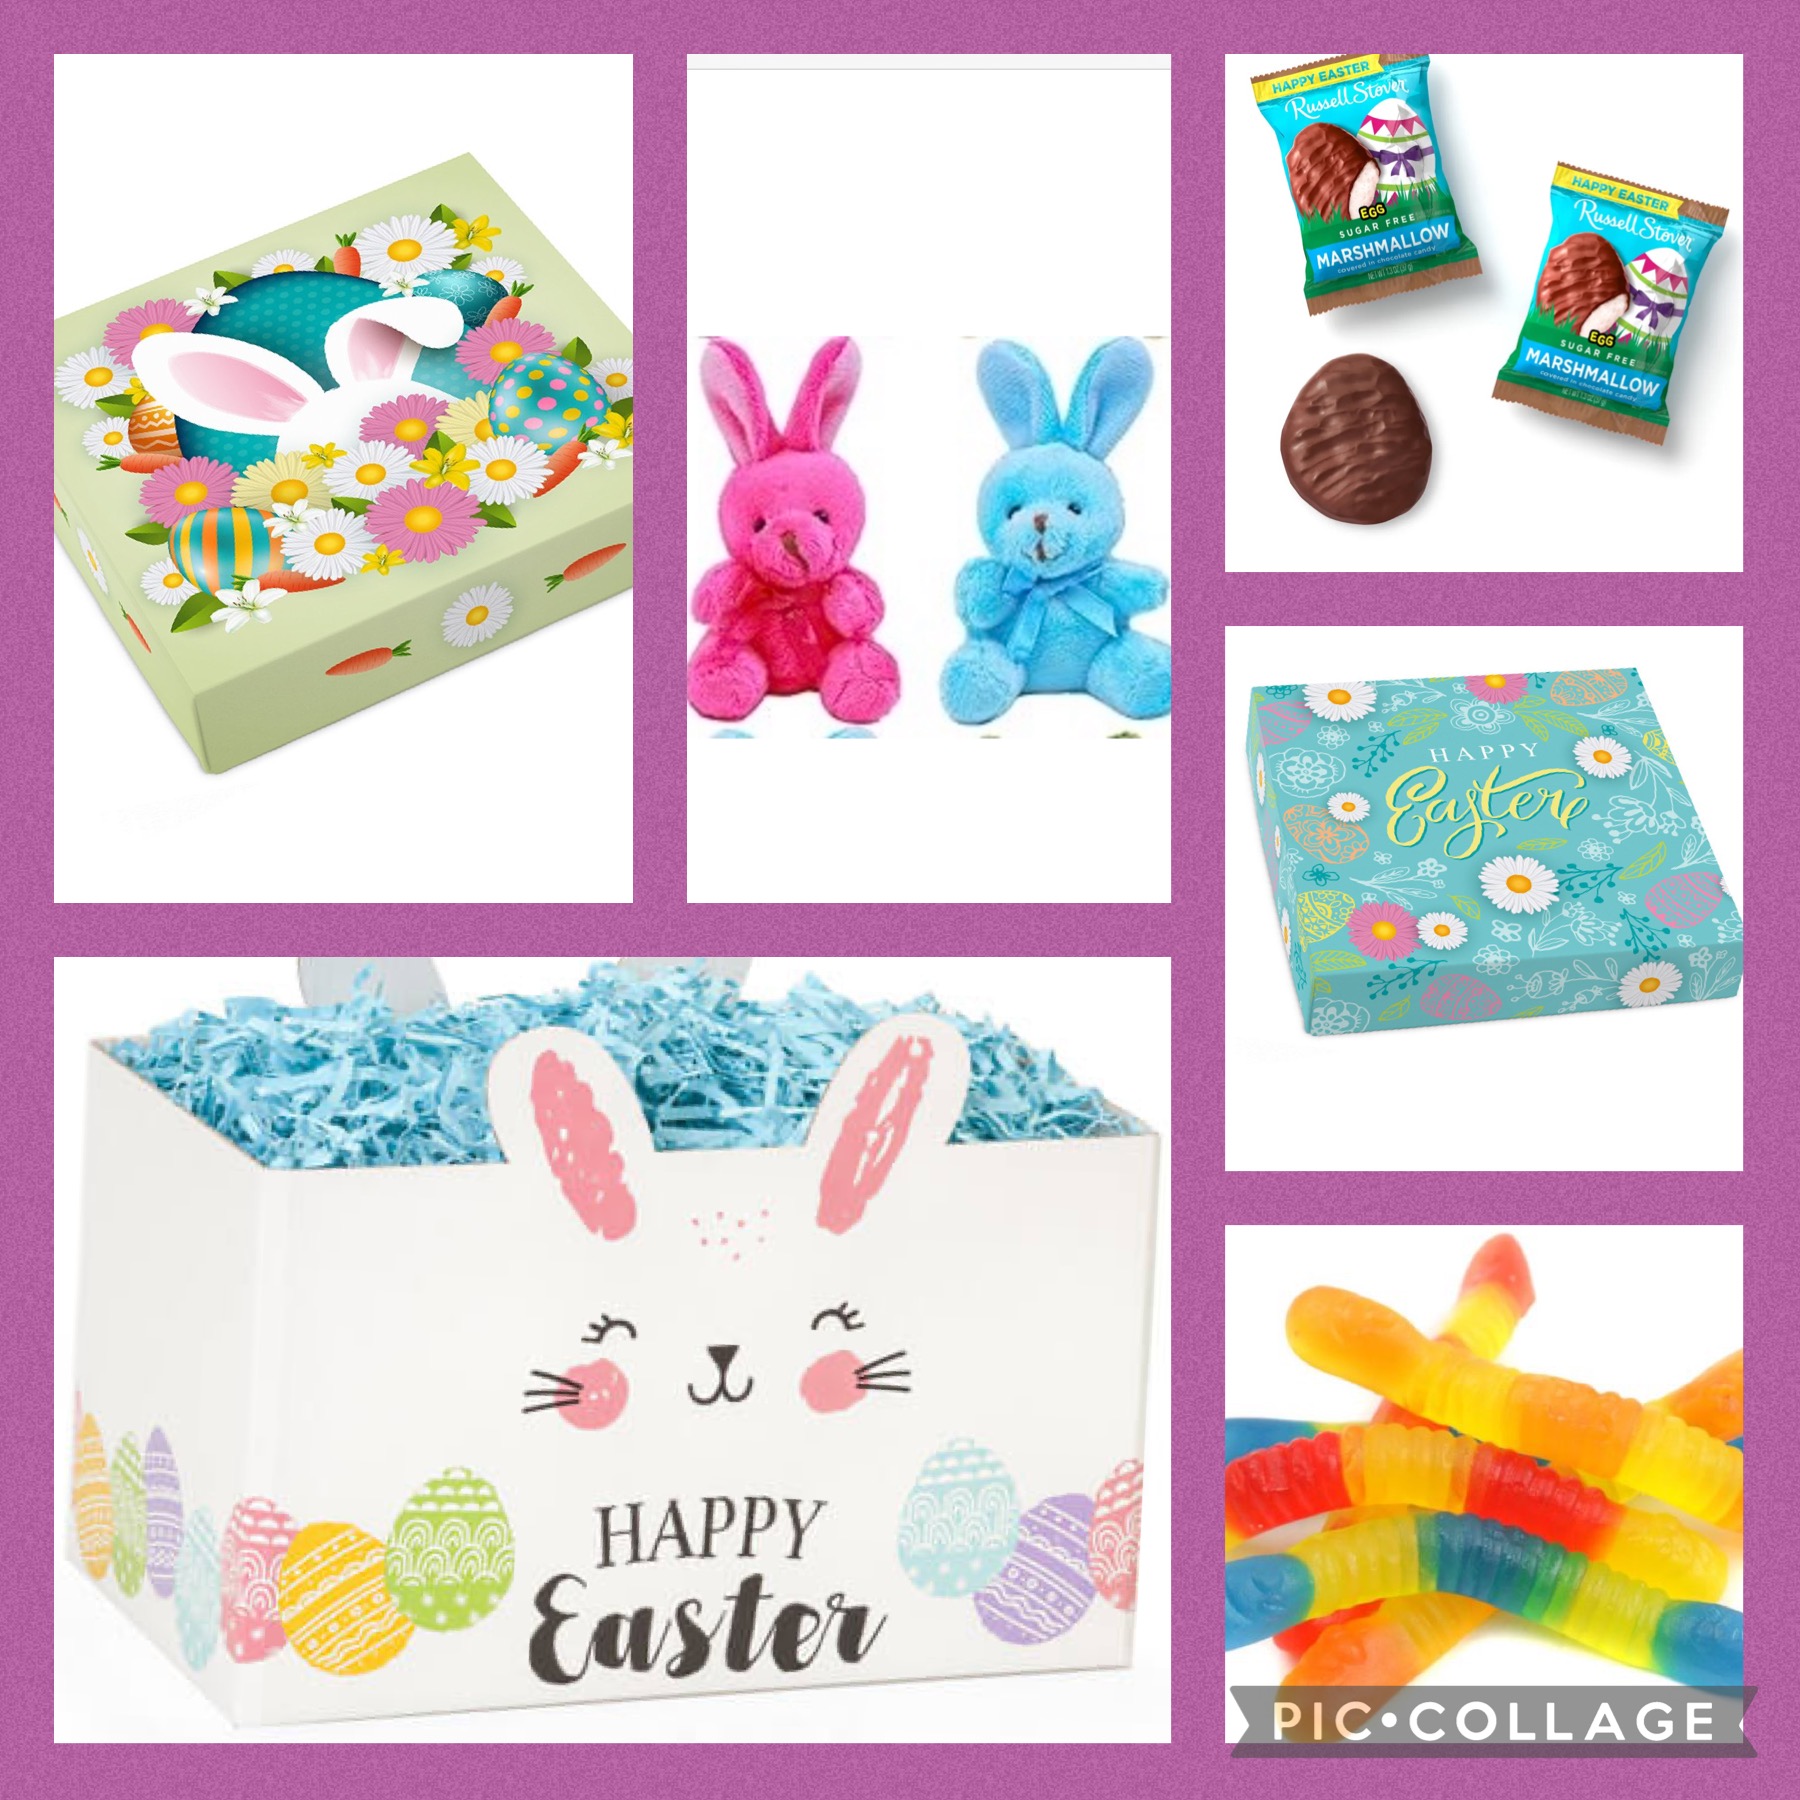 Happy Happy Easter Gift Basket Sugar Free